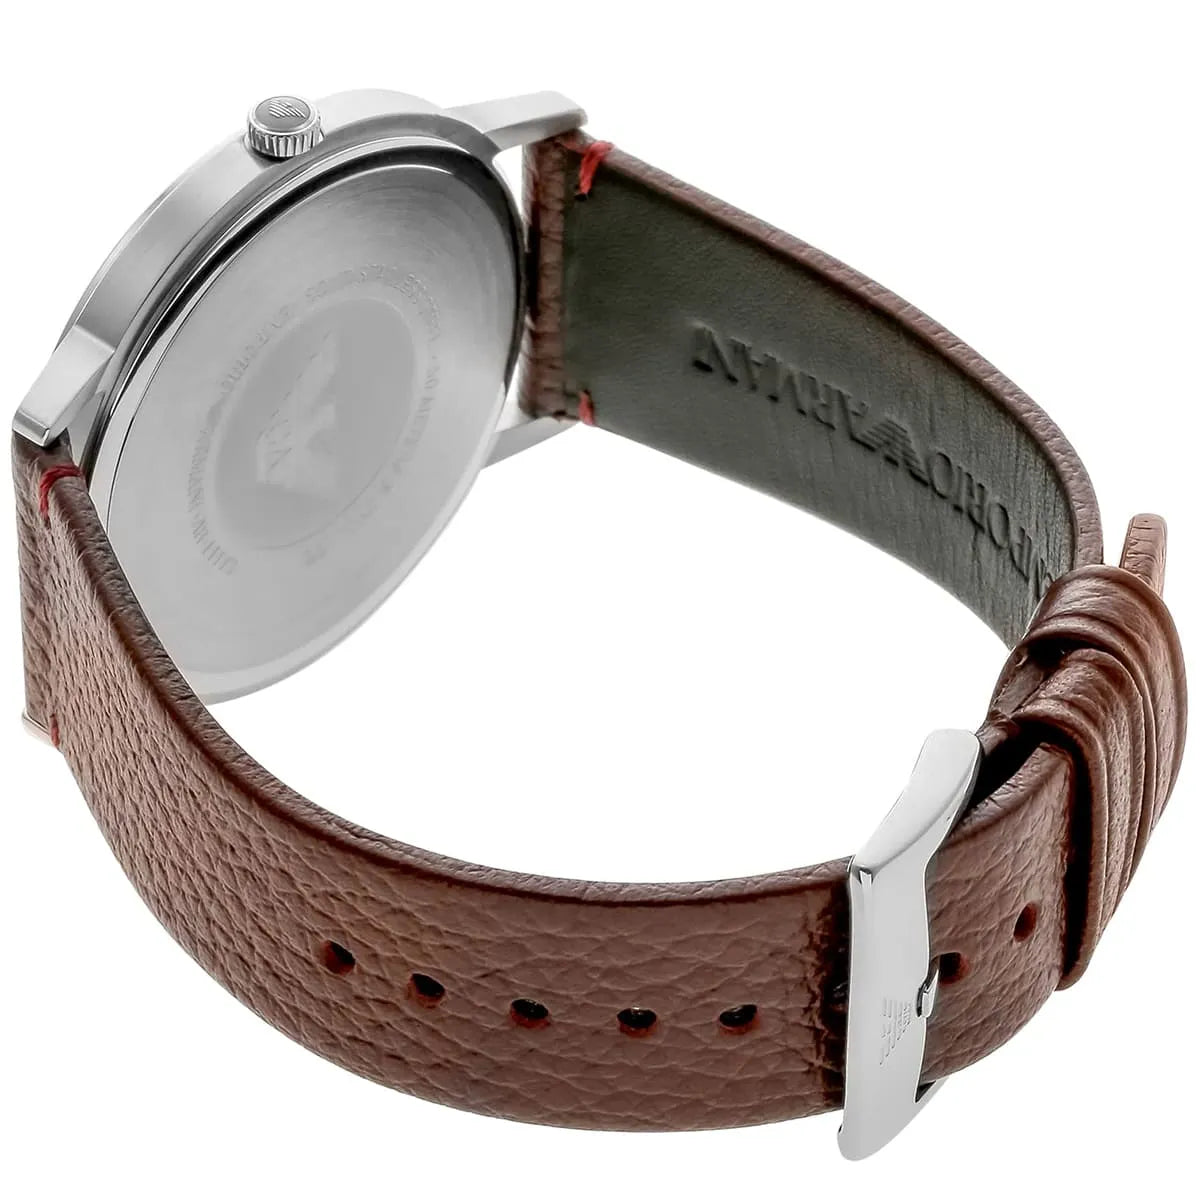 Emporio Armani Kappa Quartz Black Dial Brown Leather Strap Watch For Men - AR11153